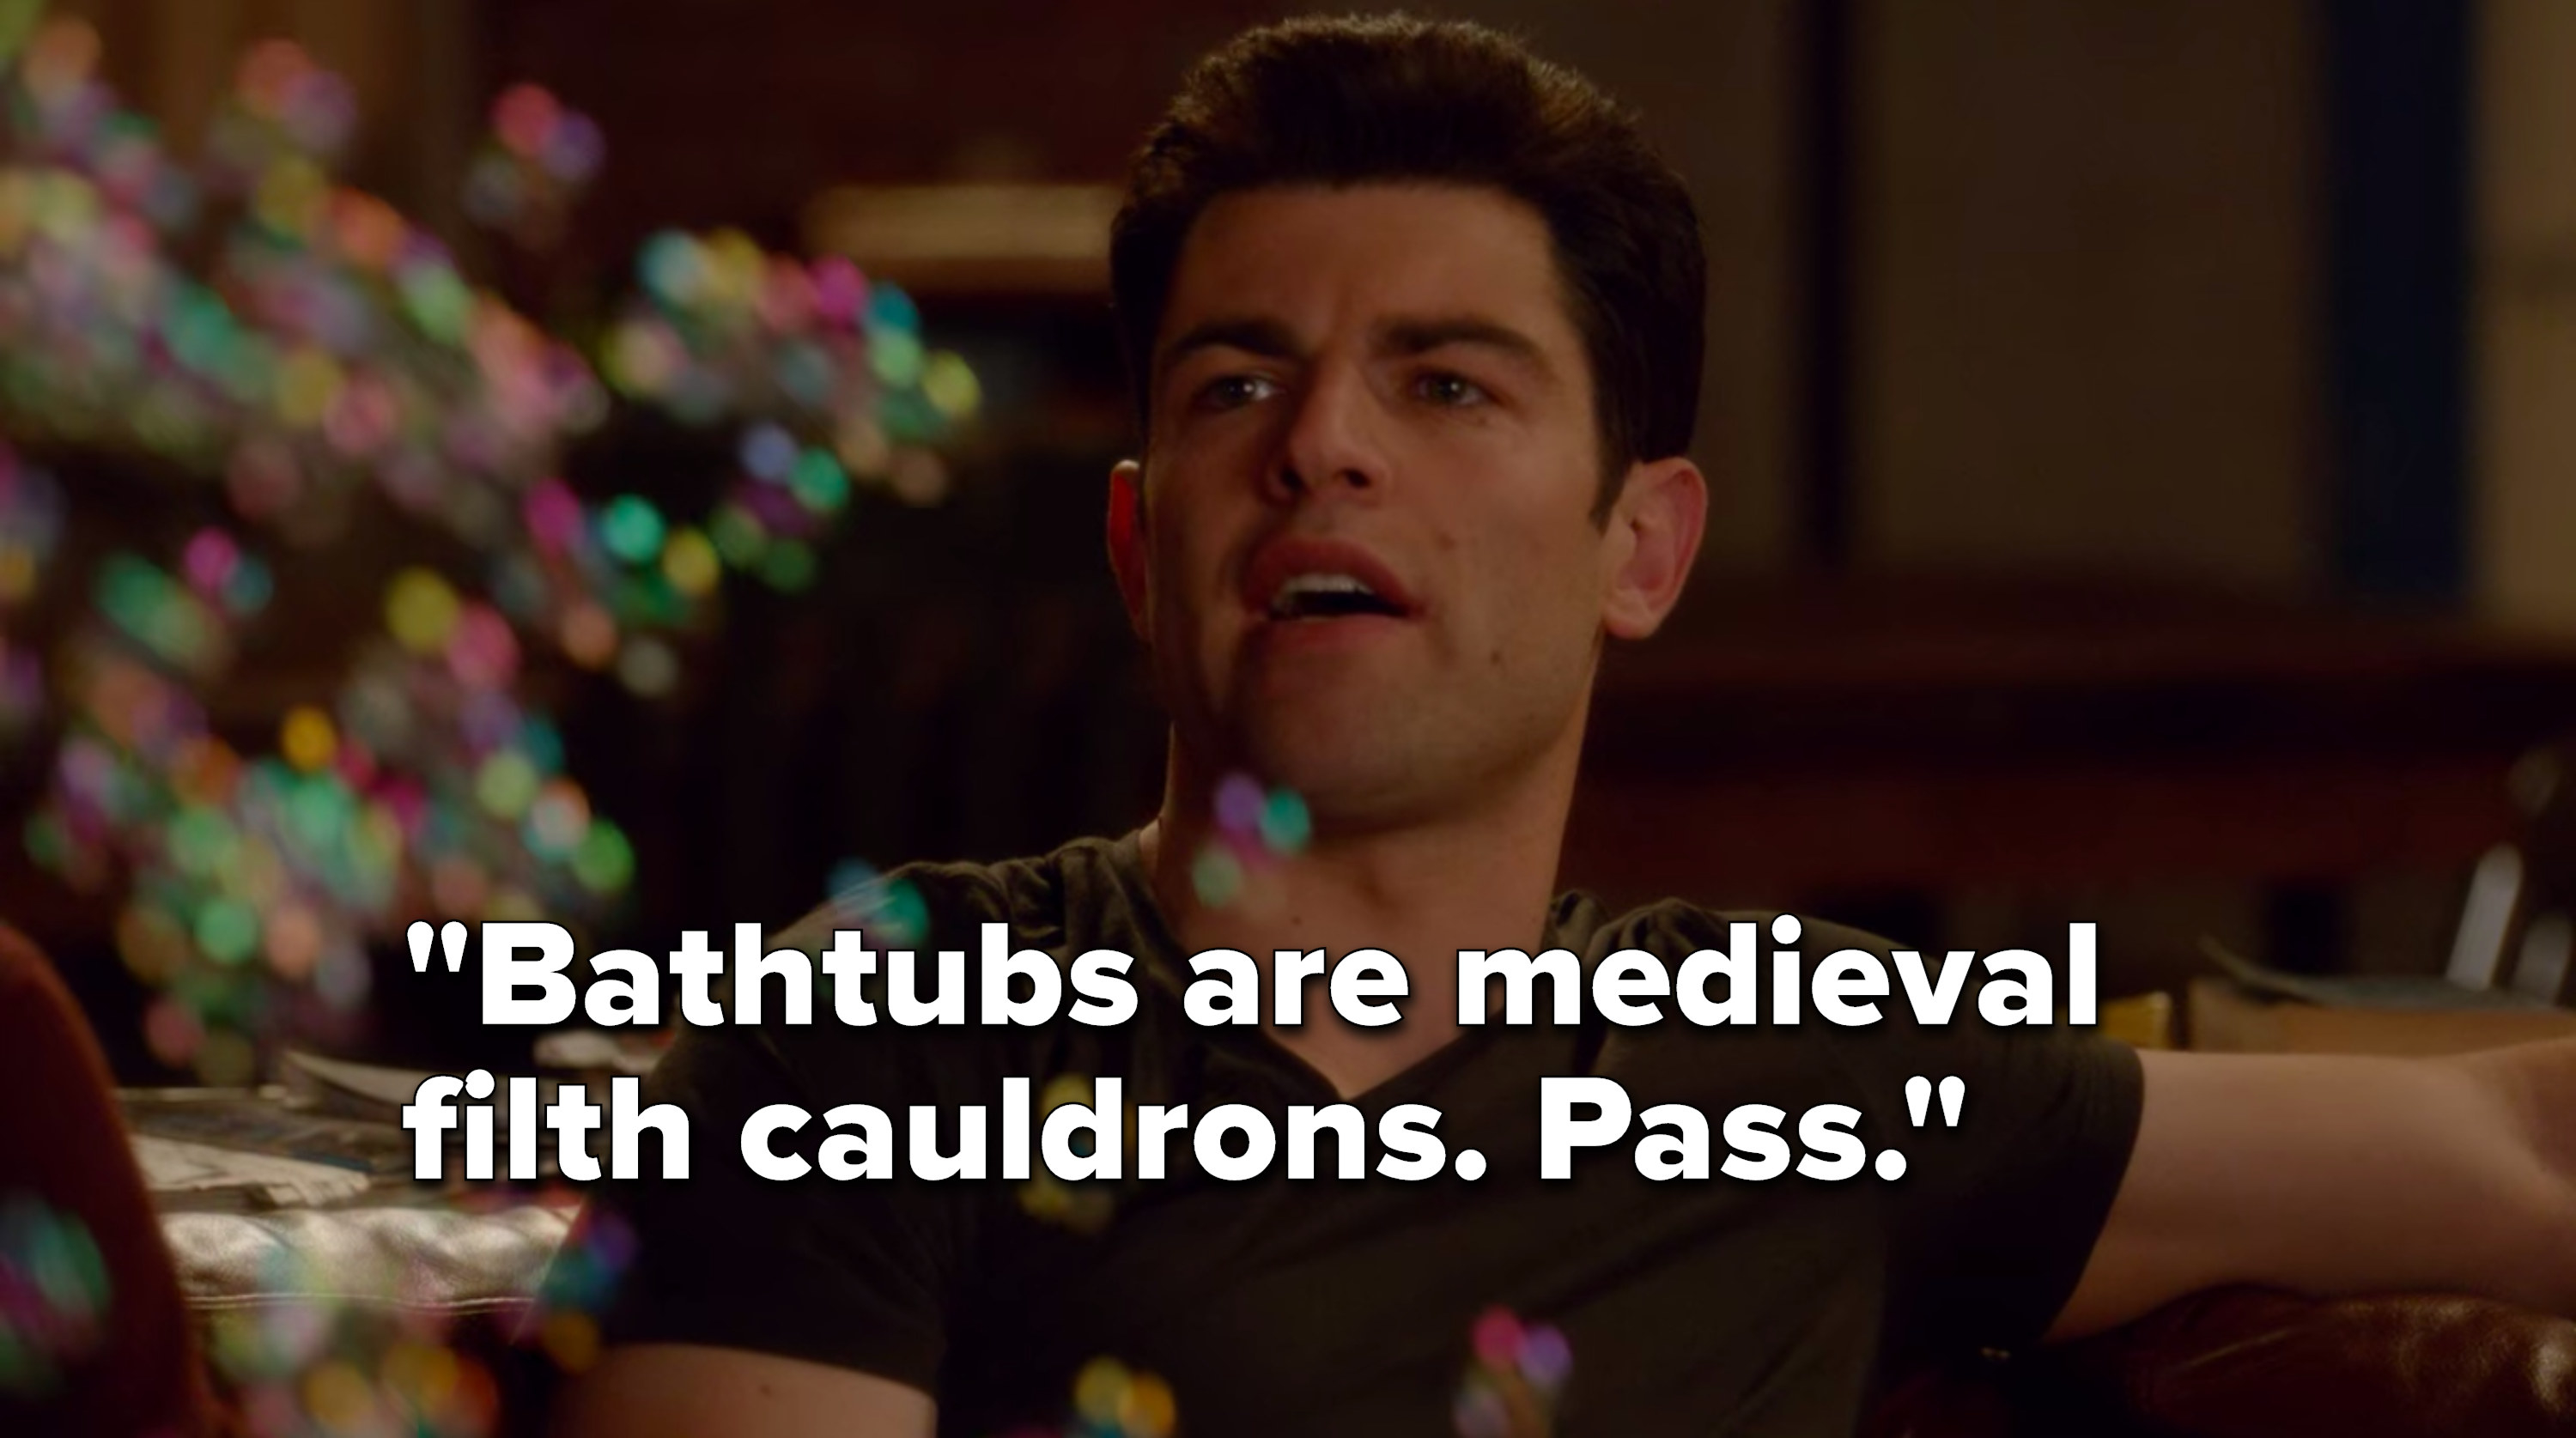 Schmidt says, &quot;Bathtubs are medieval filth cauldrons, pass&quot;